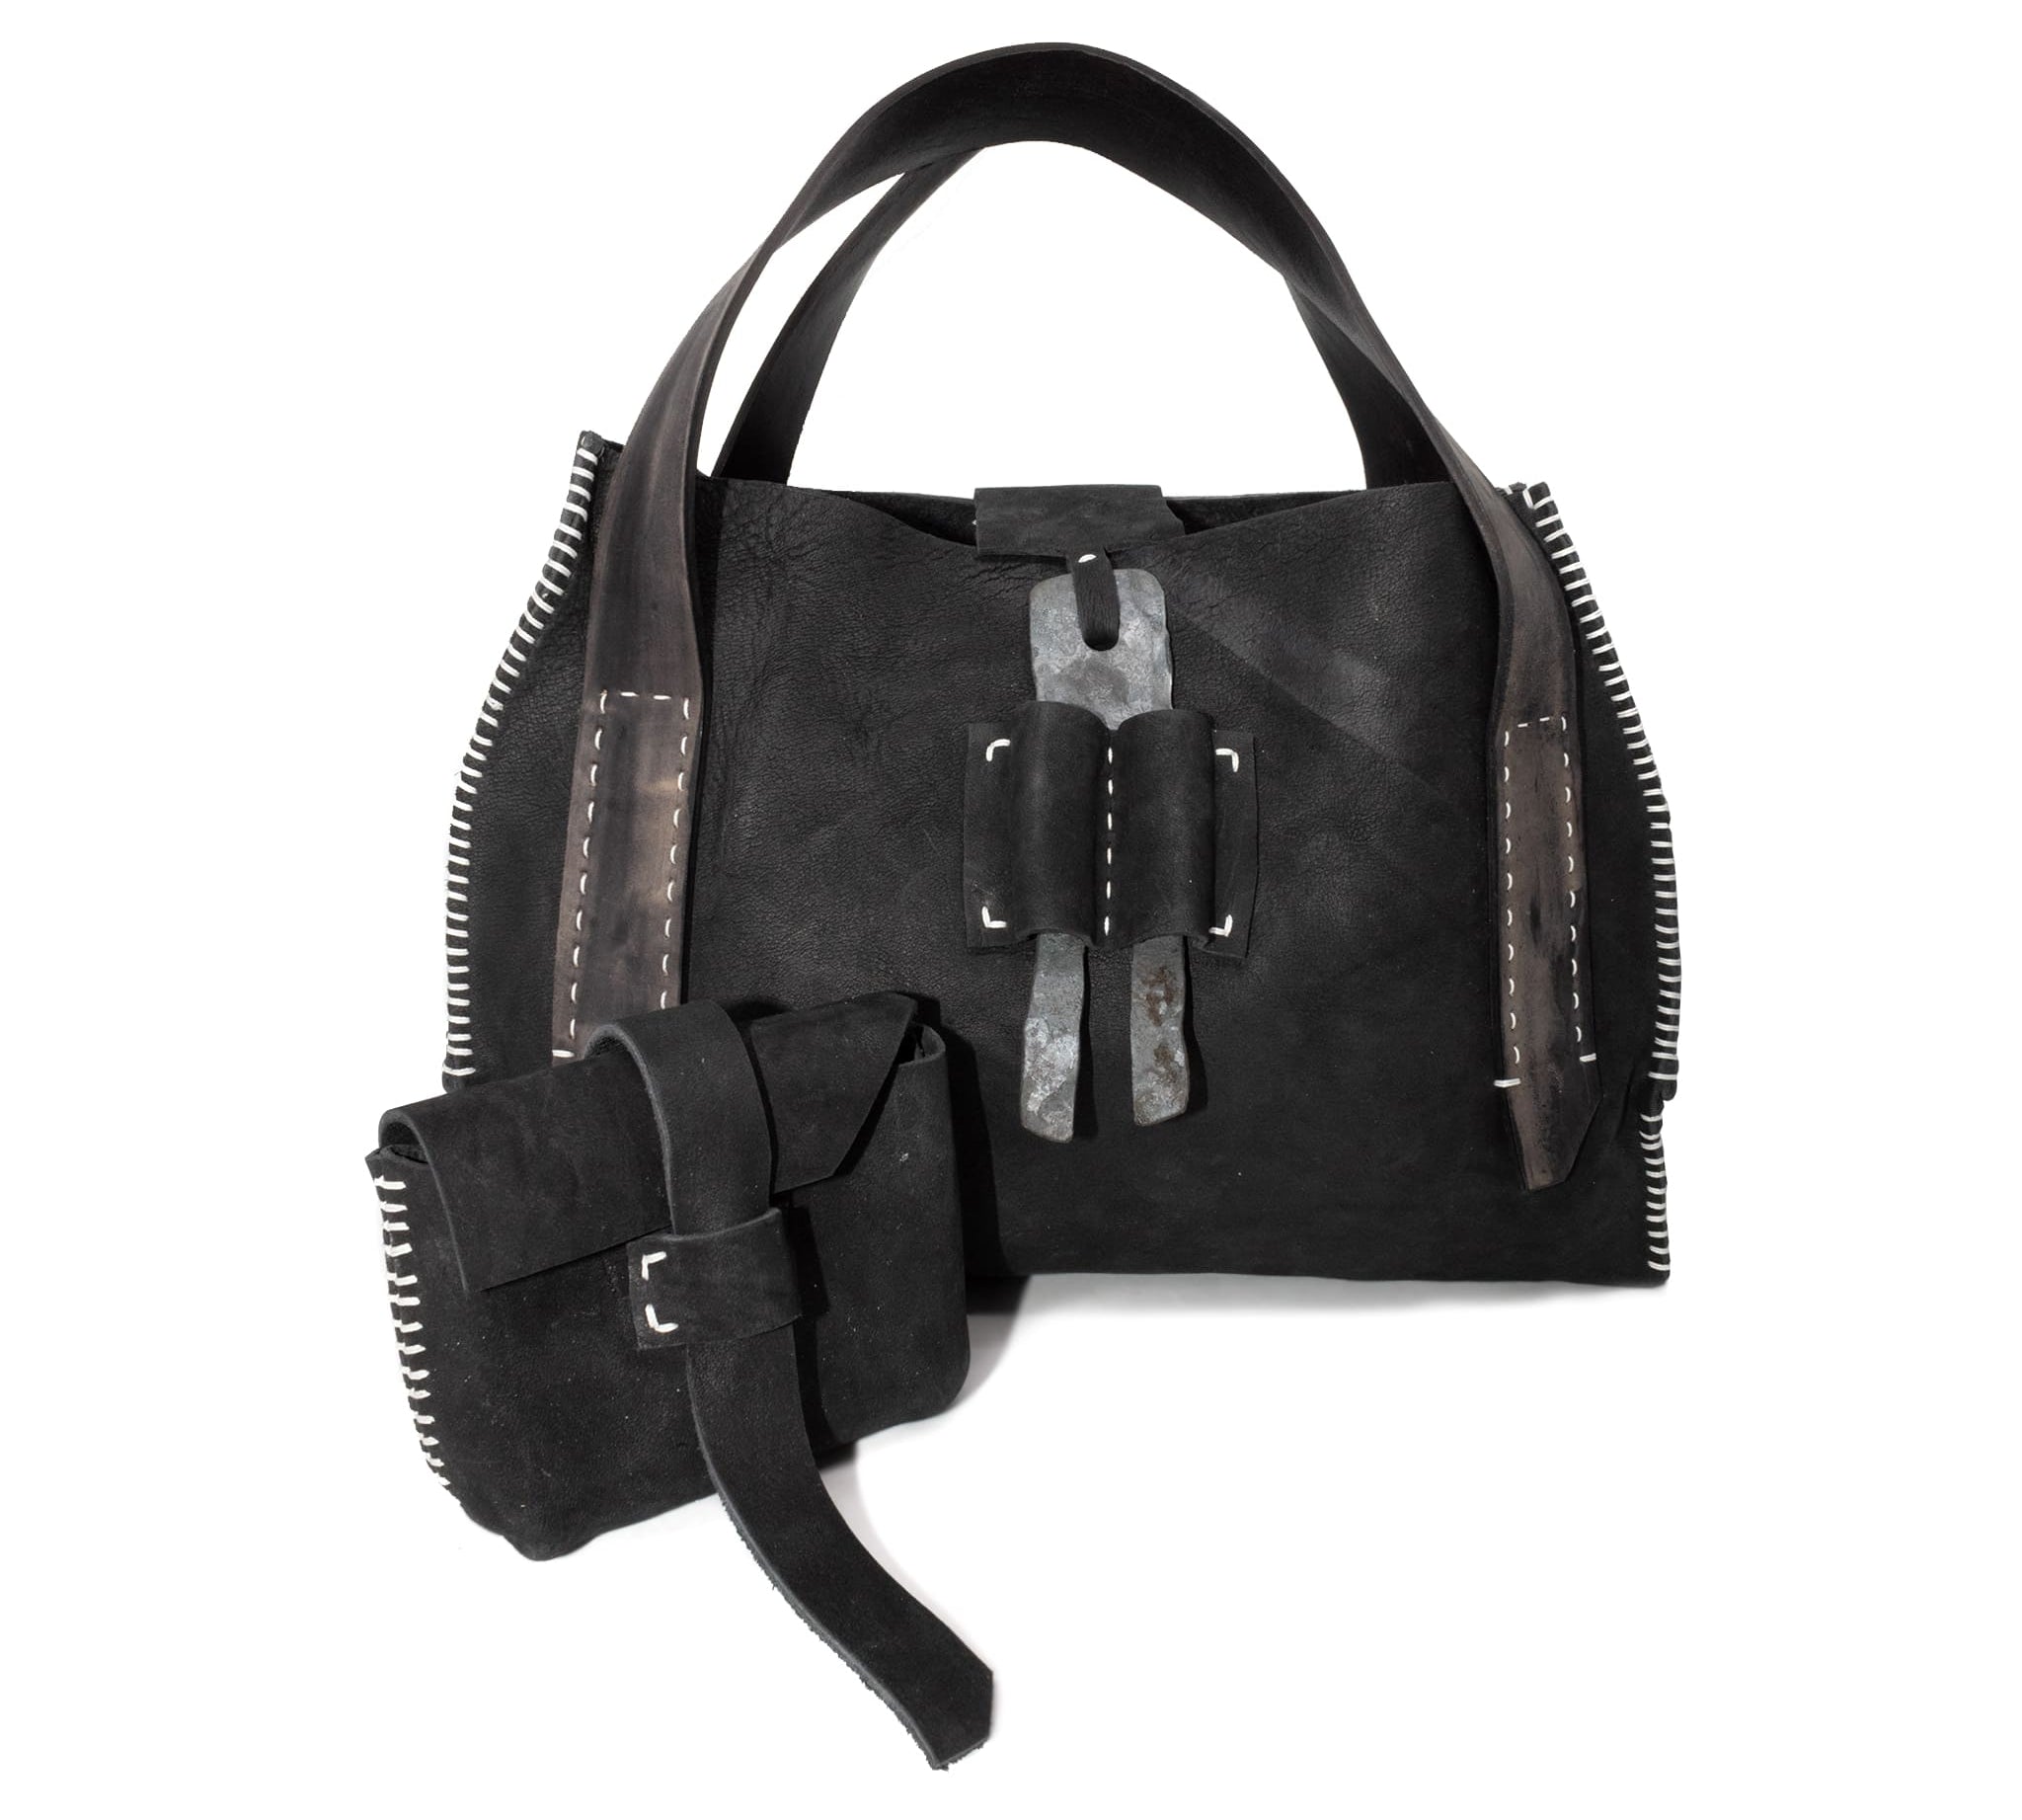 avant garde leather handbag from atelier skn available to buy online.